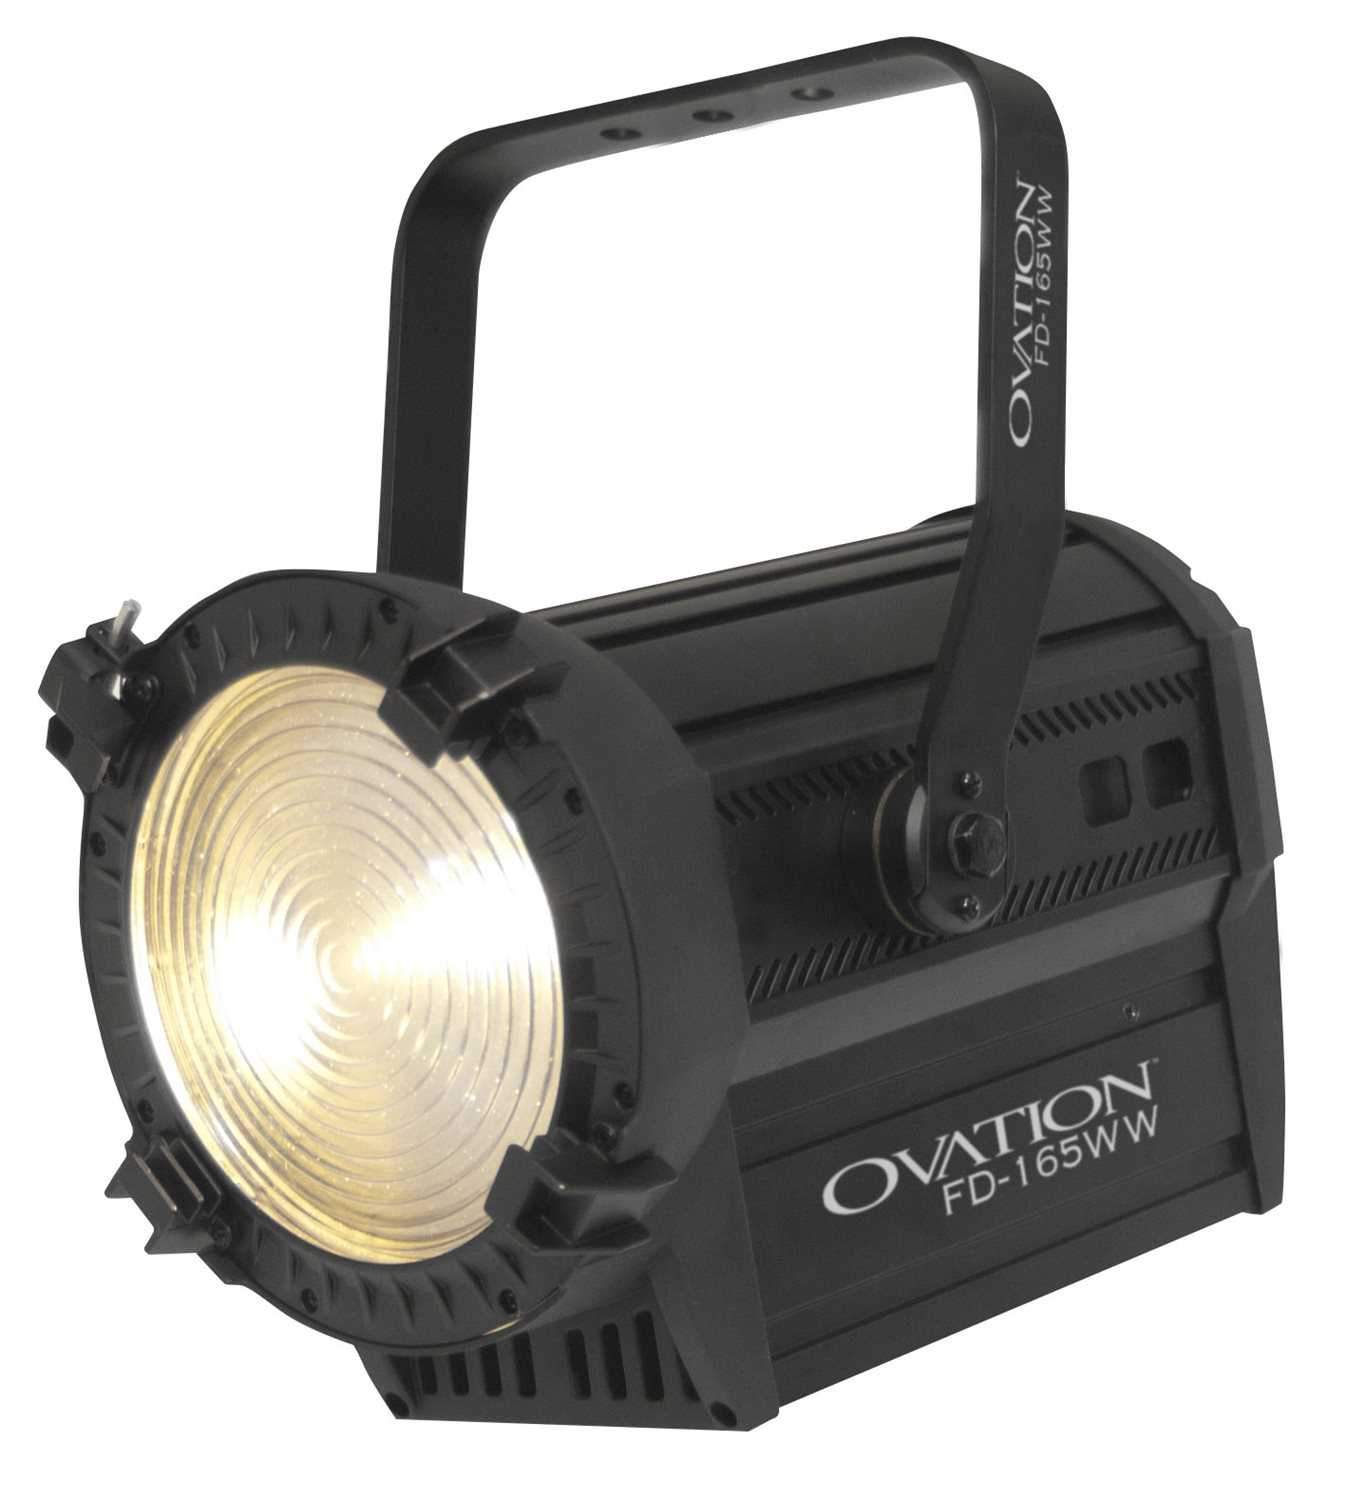 Chauvet Ovation FD-165WW 16x10w LED Fresnel Light - PSSL ProSound and Stage Lighting